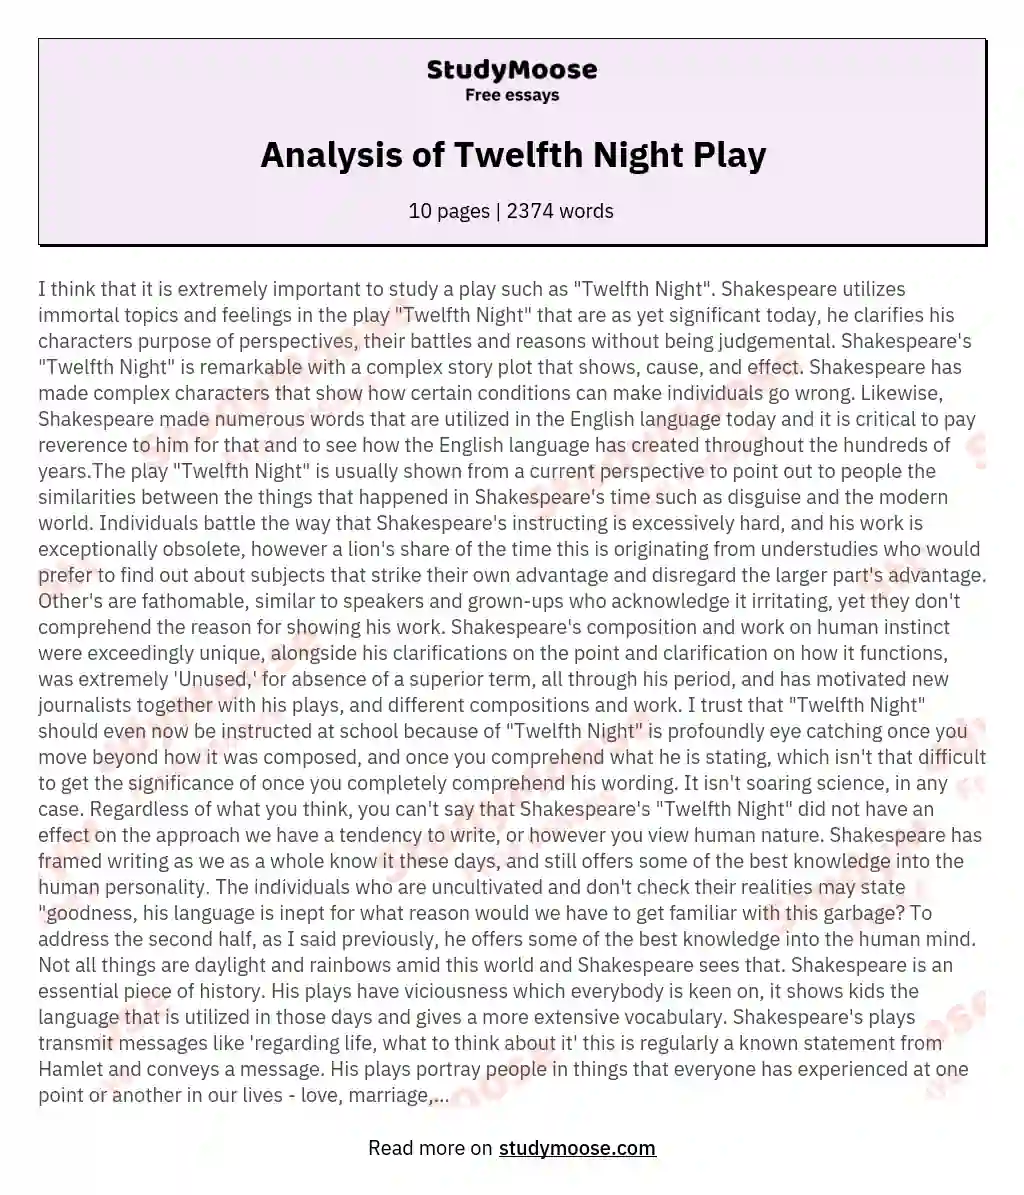 Analysis of Twelfth Night Play essay